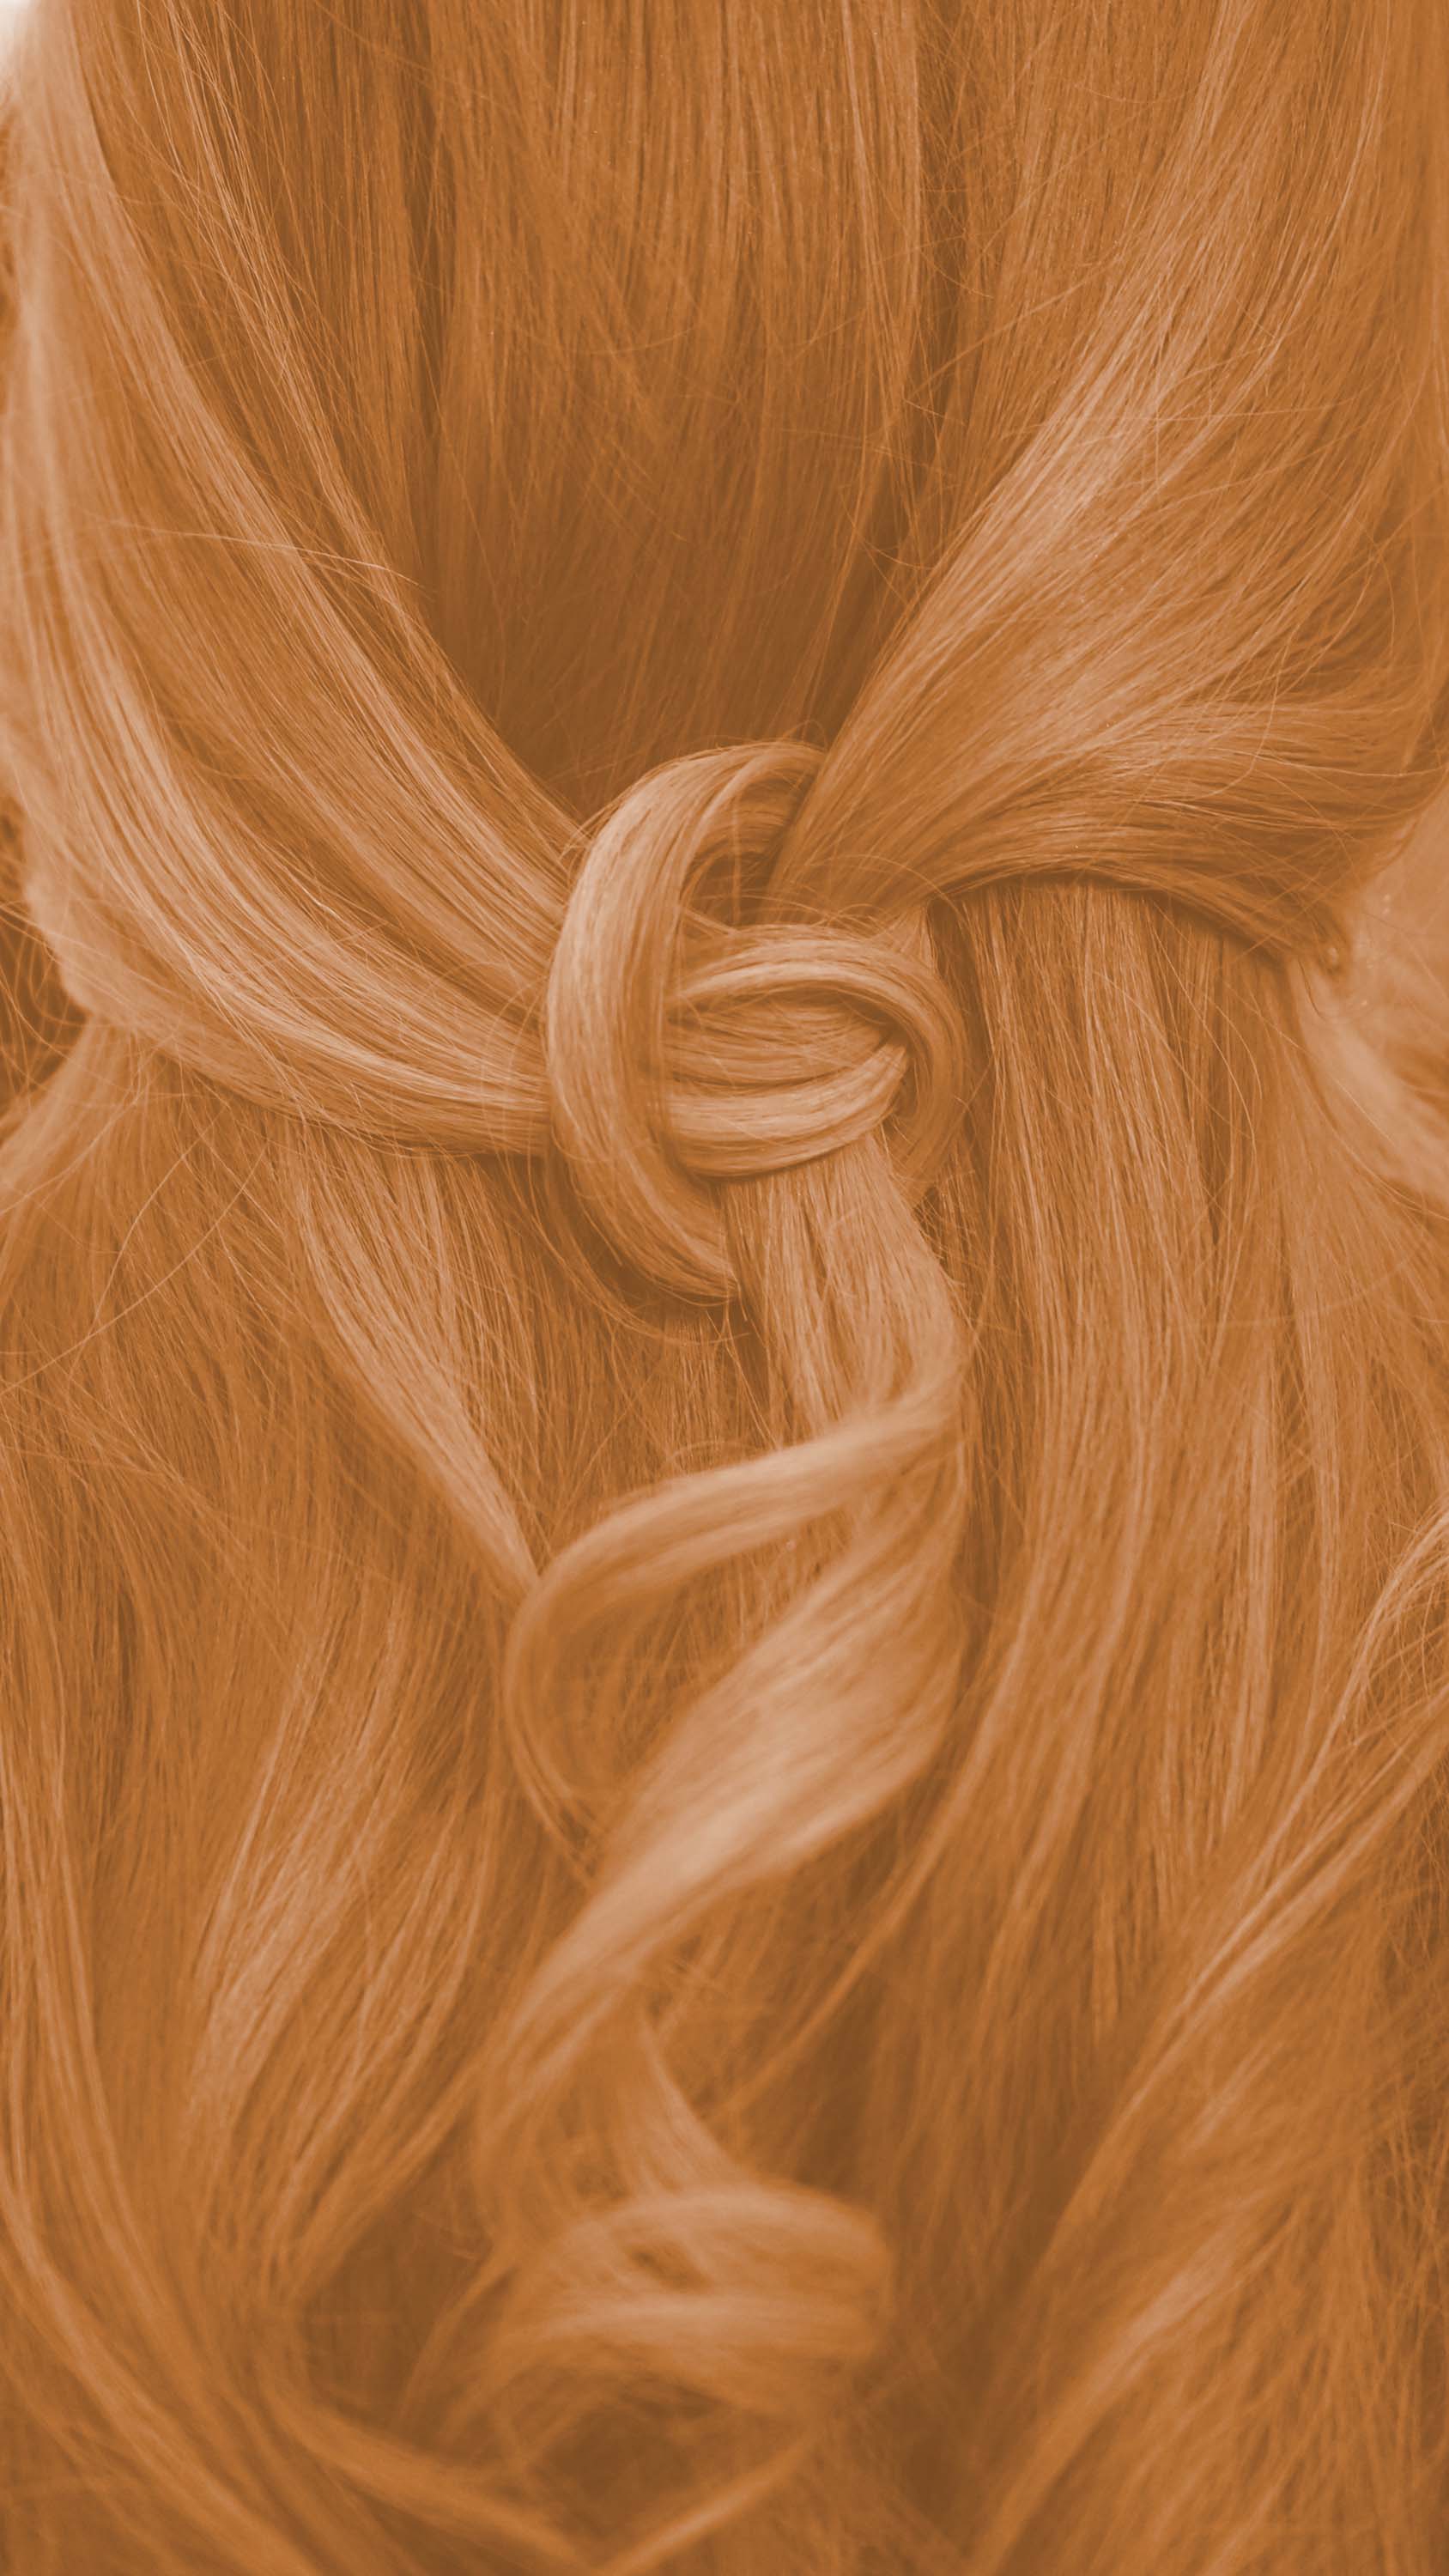 Limited Edition Profi-Pflanzenhaarfarbe "warmes helles Kupfer-Blond - warm tizian blond" 300g